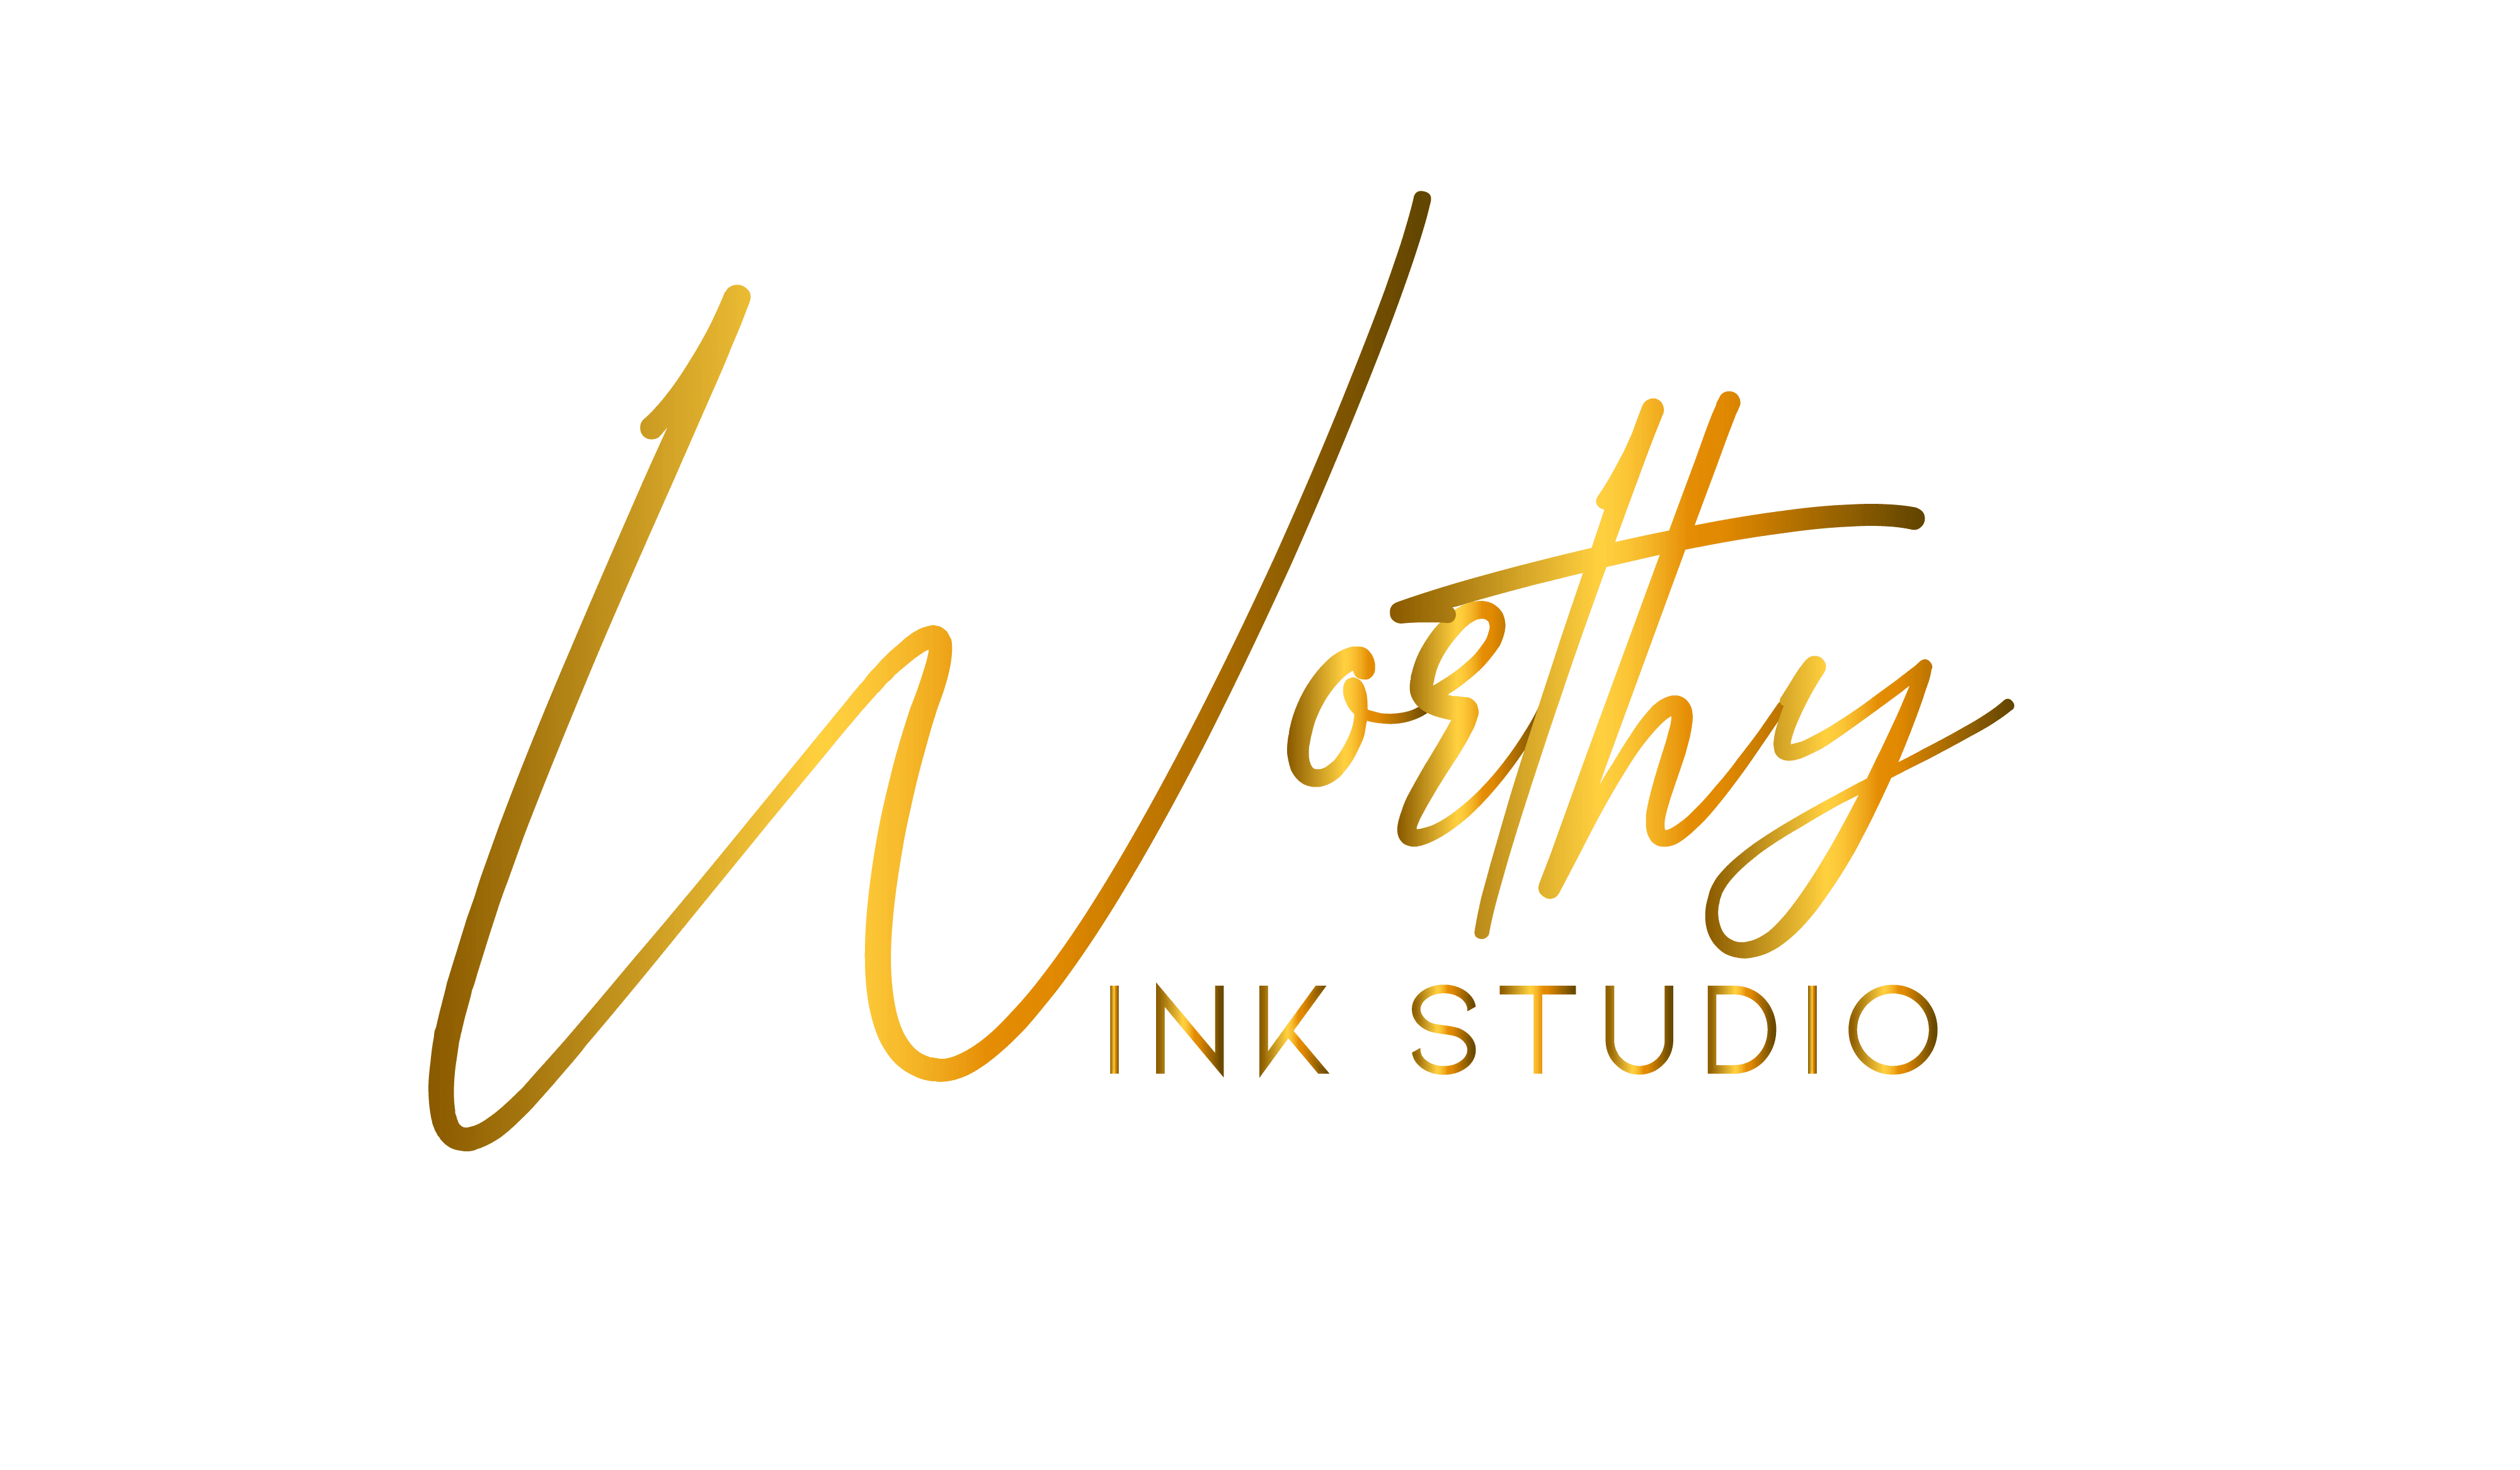 Worthy Ink Studio